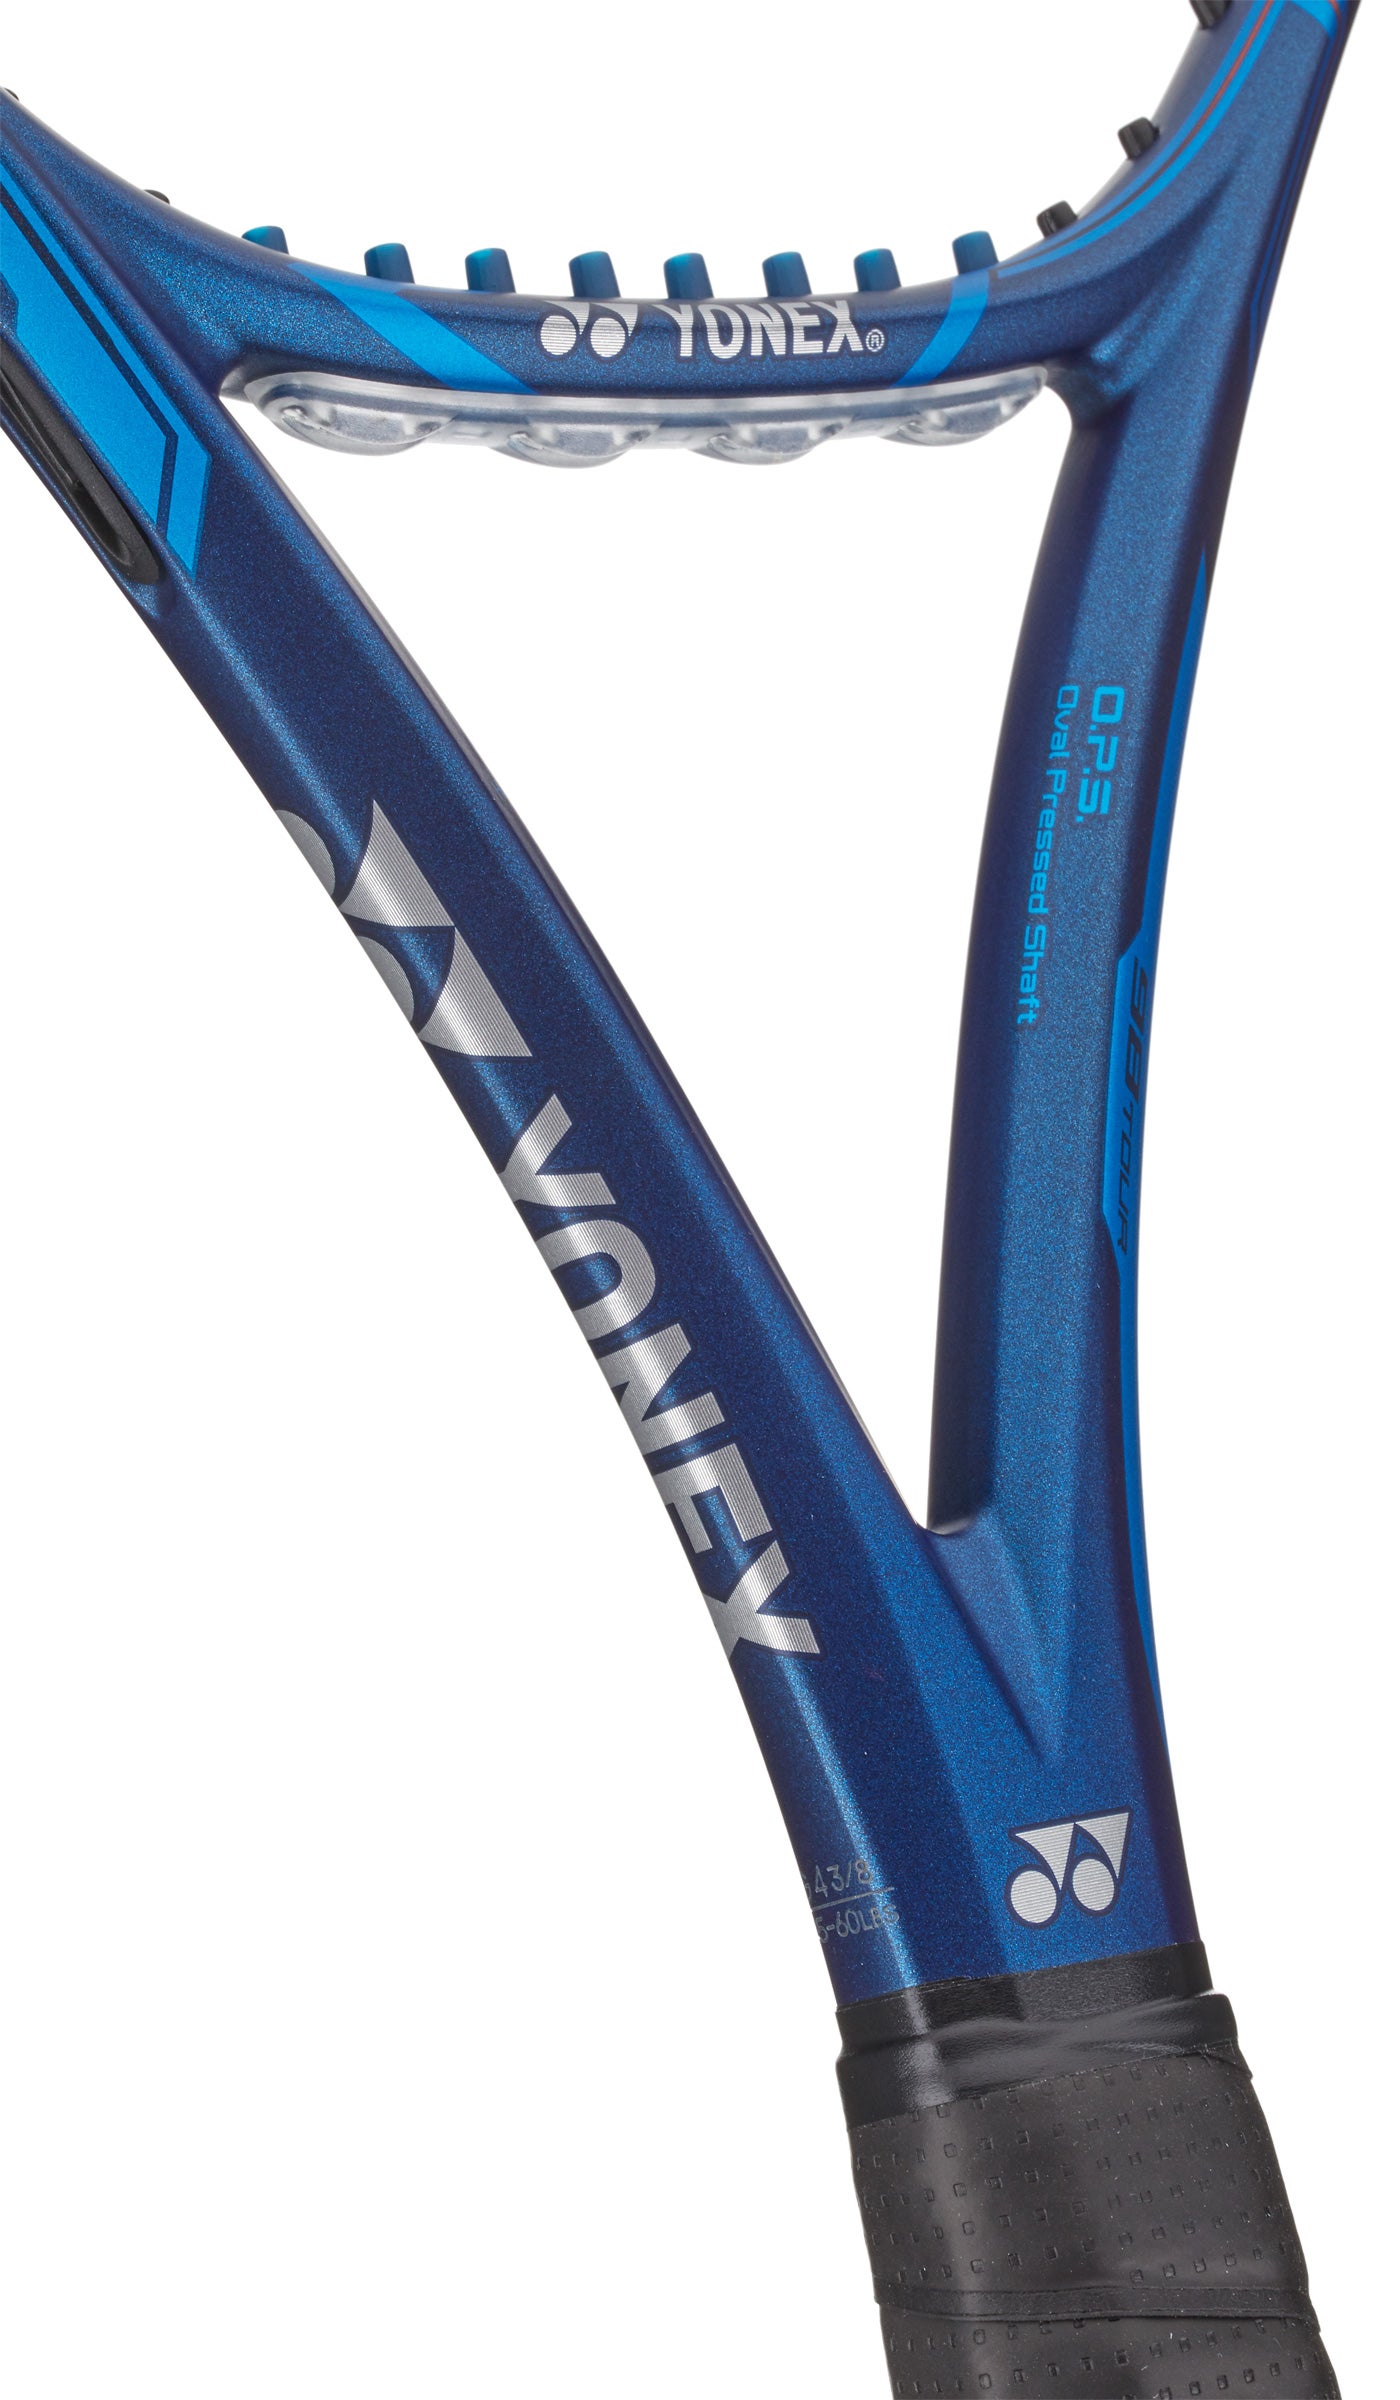 Yonex ezone Tour 98 315g unbesaitet 315g raqueta de tenis azul oscuro-azul pálido 2 